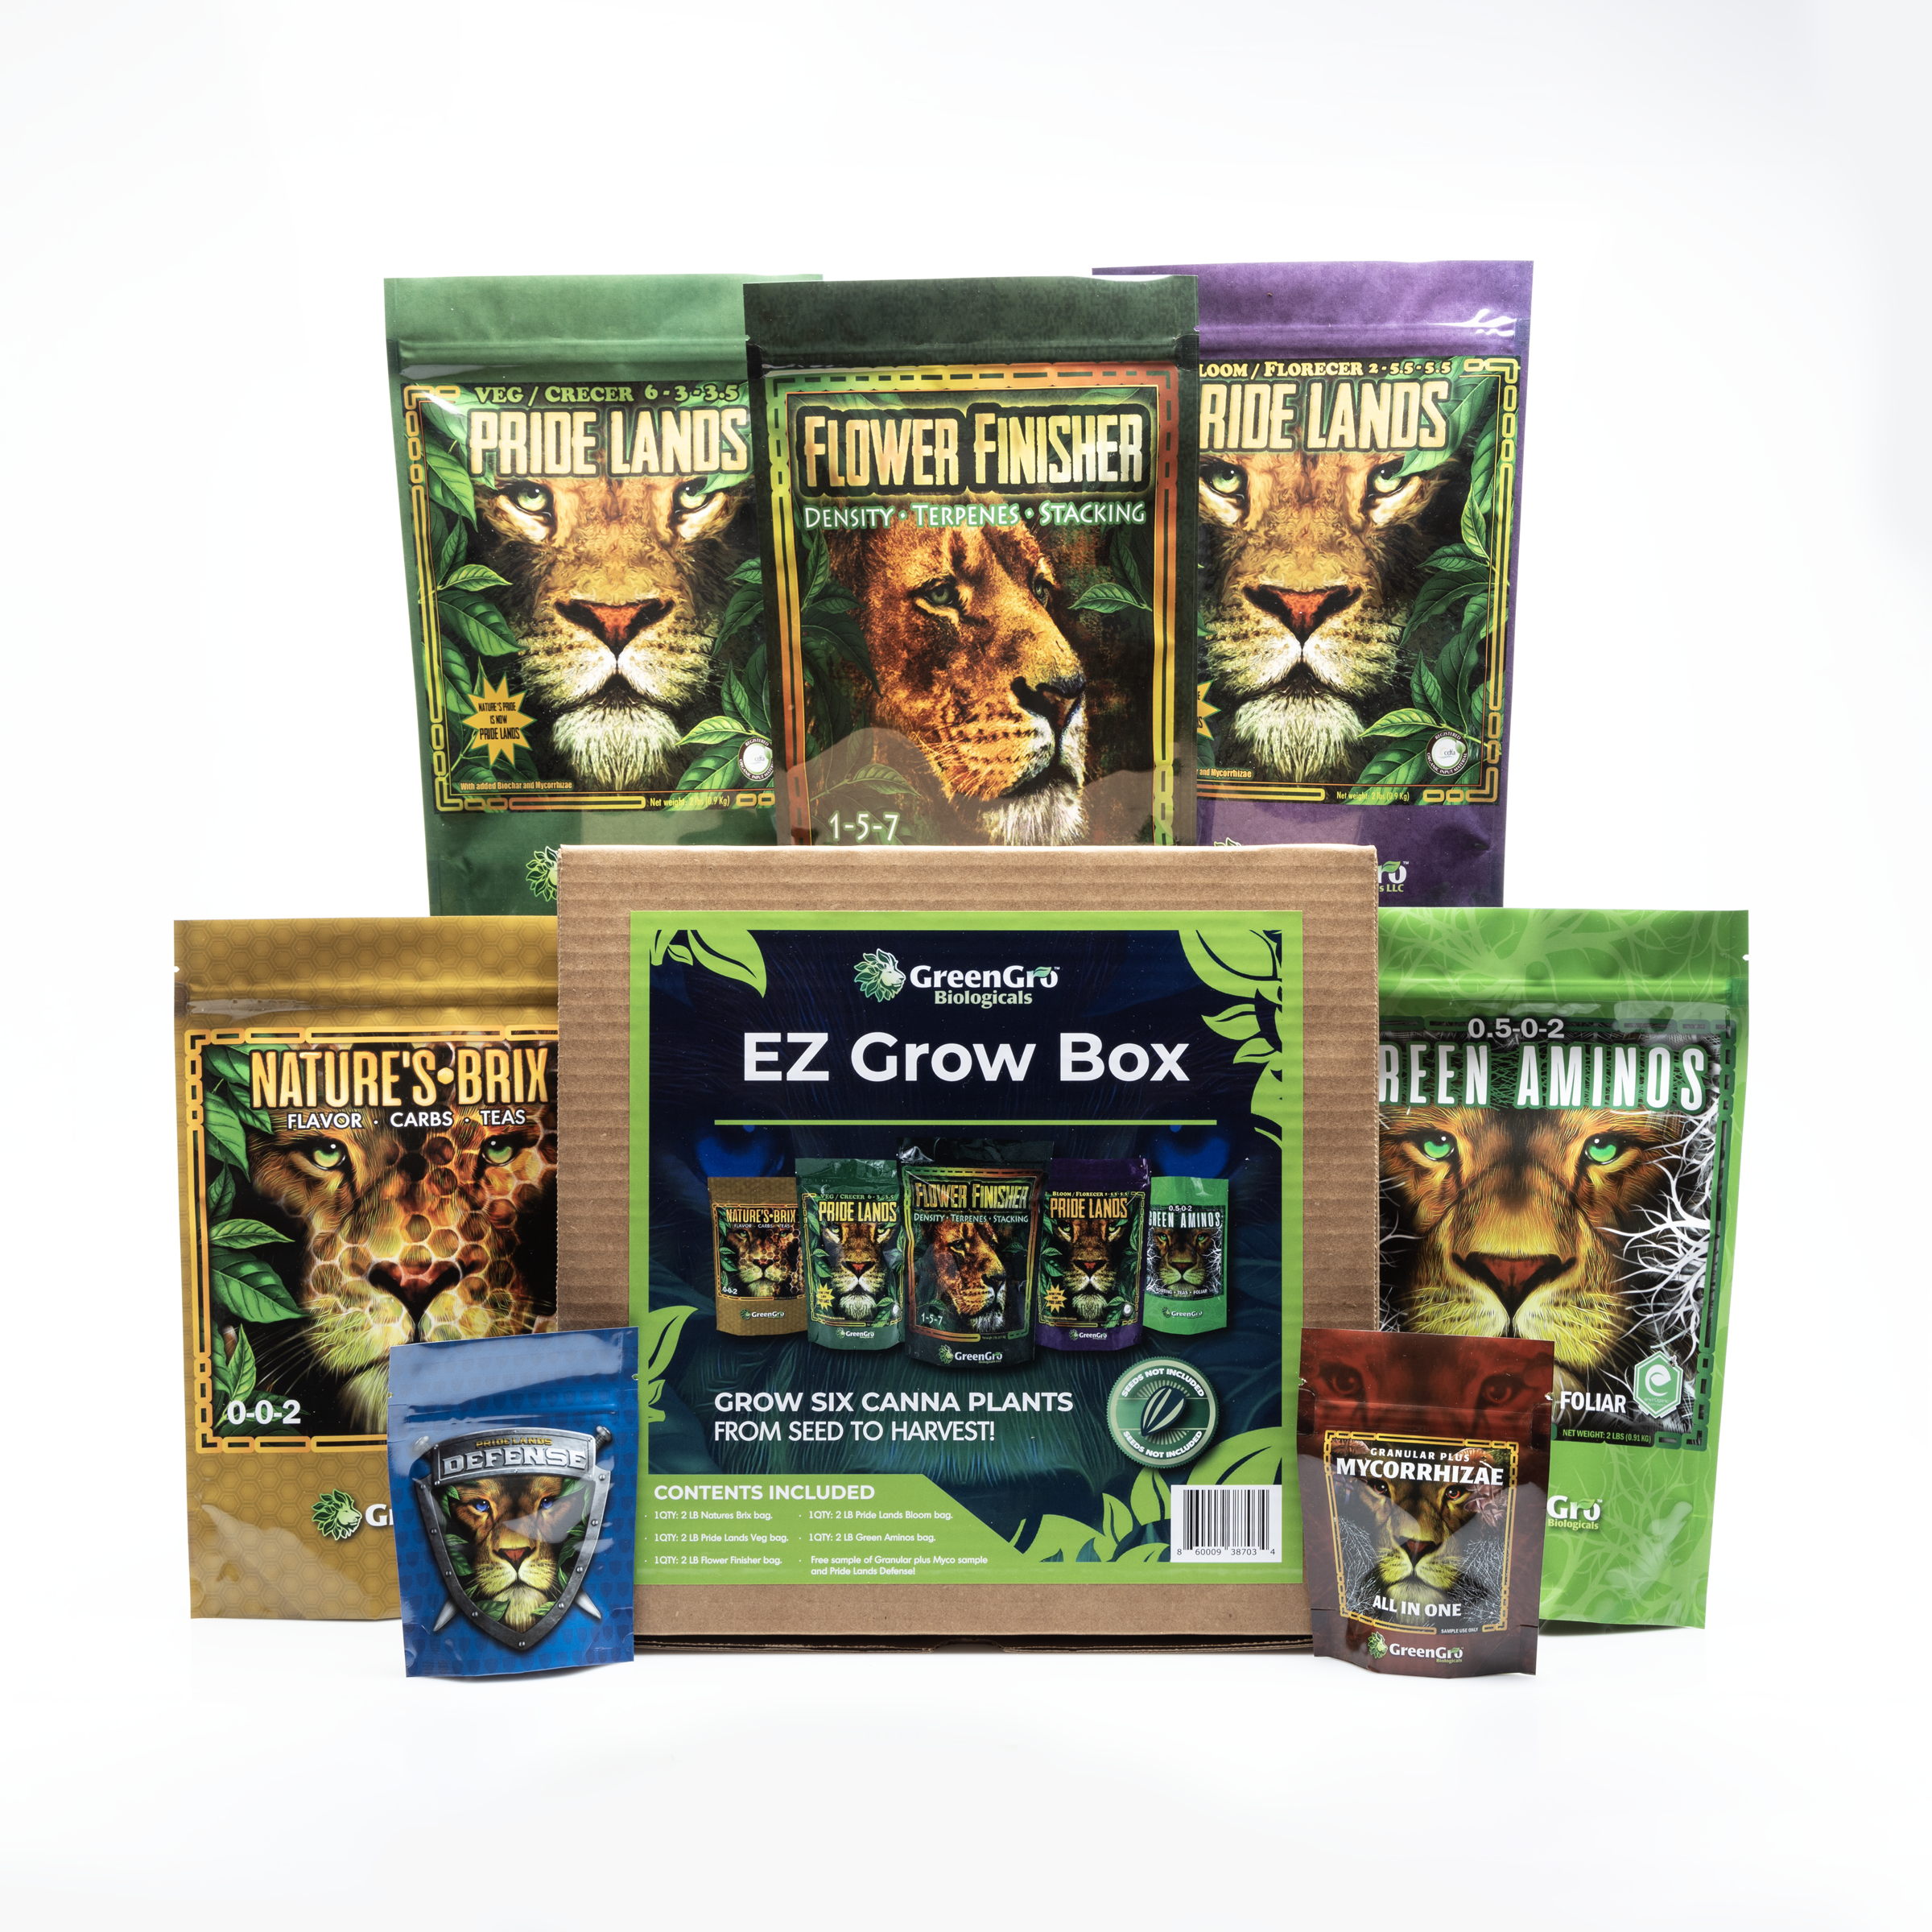 EZ Grow Box 2LB Veg, Bloom, Finisher, Brix, Green Aminos, Myco Sampler 2 oz + Extra Sample + Catalog with Guides + GreenGro Sticker